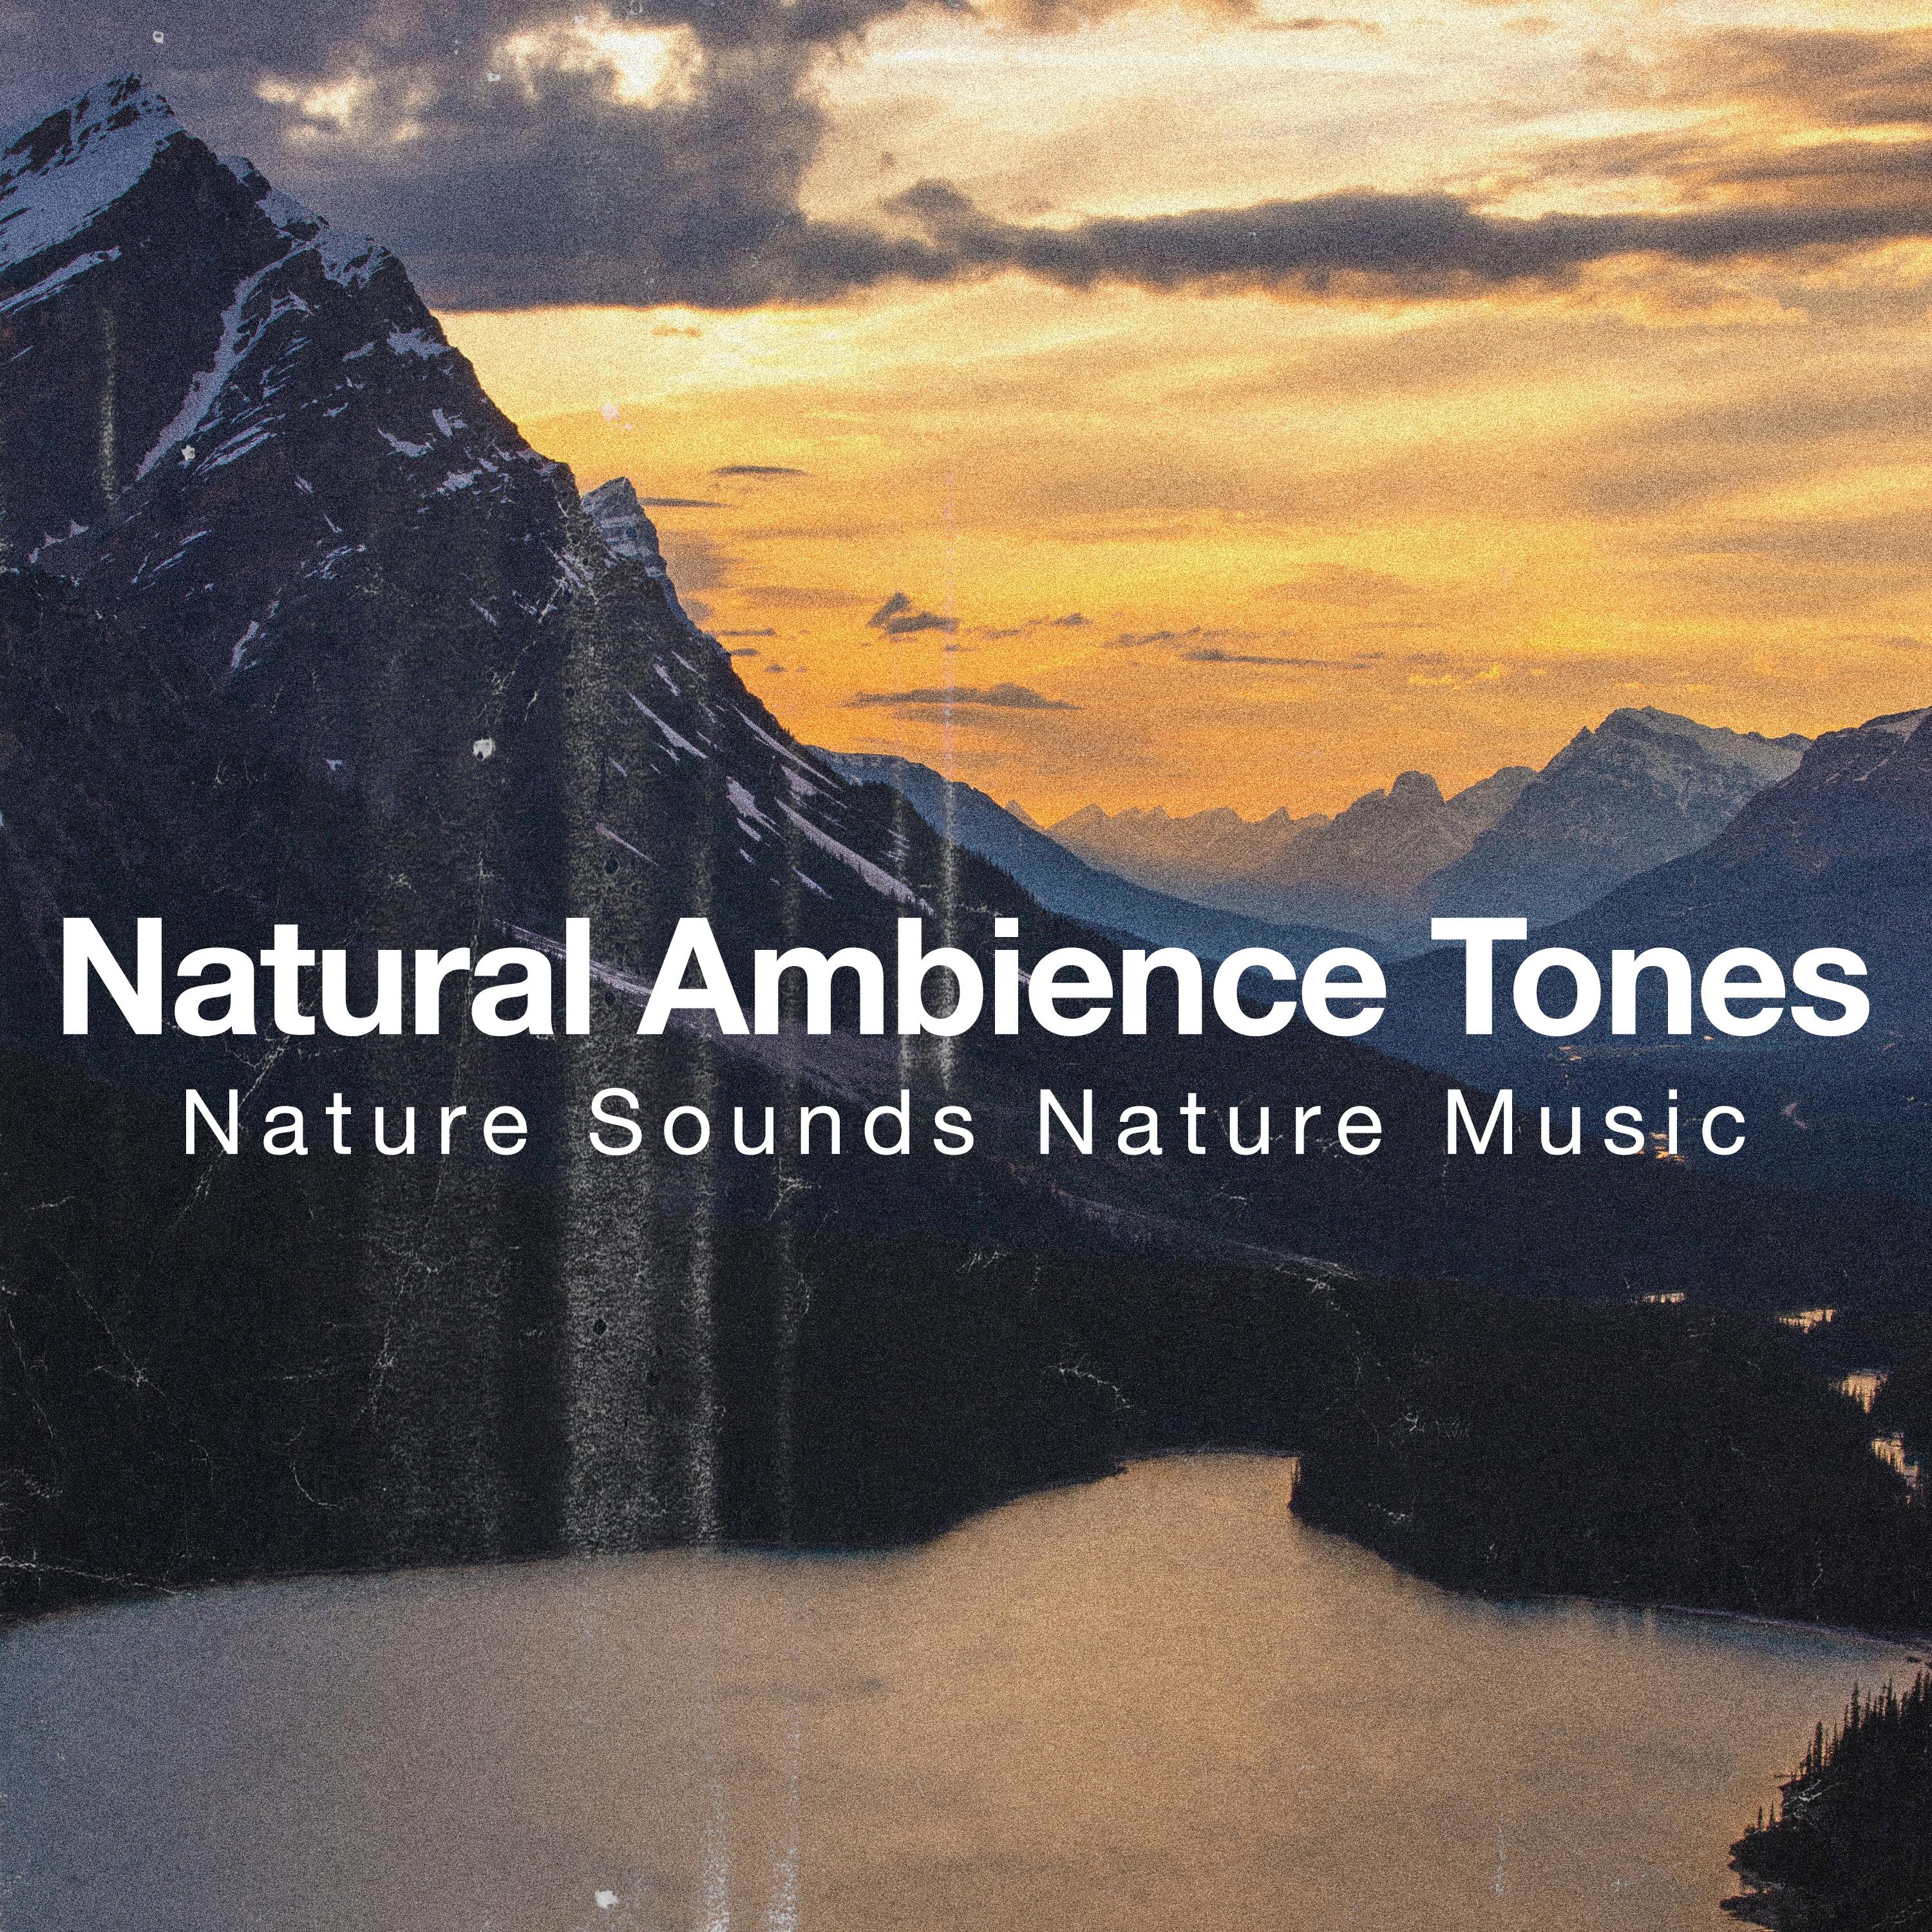 Natural Ambience Tones